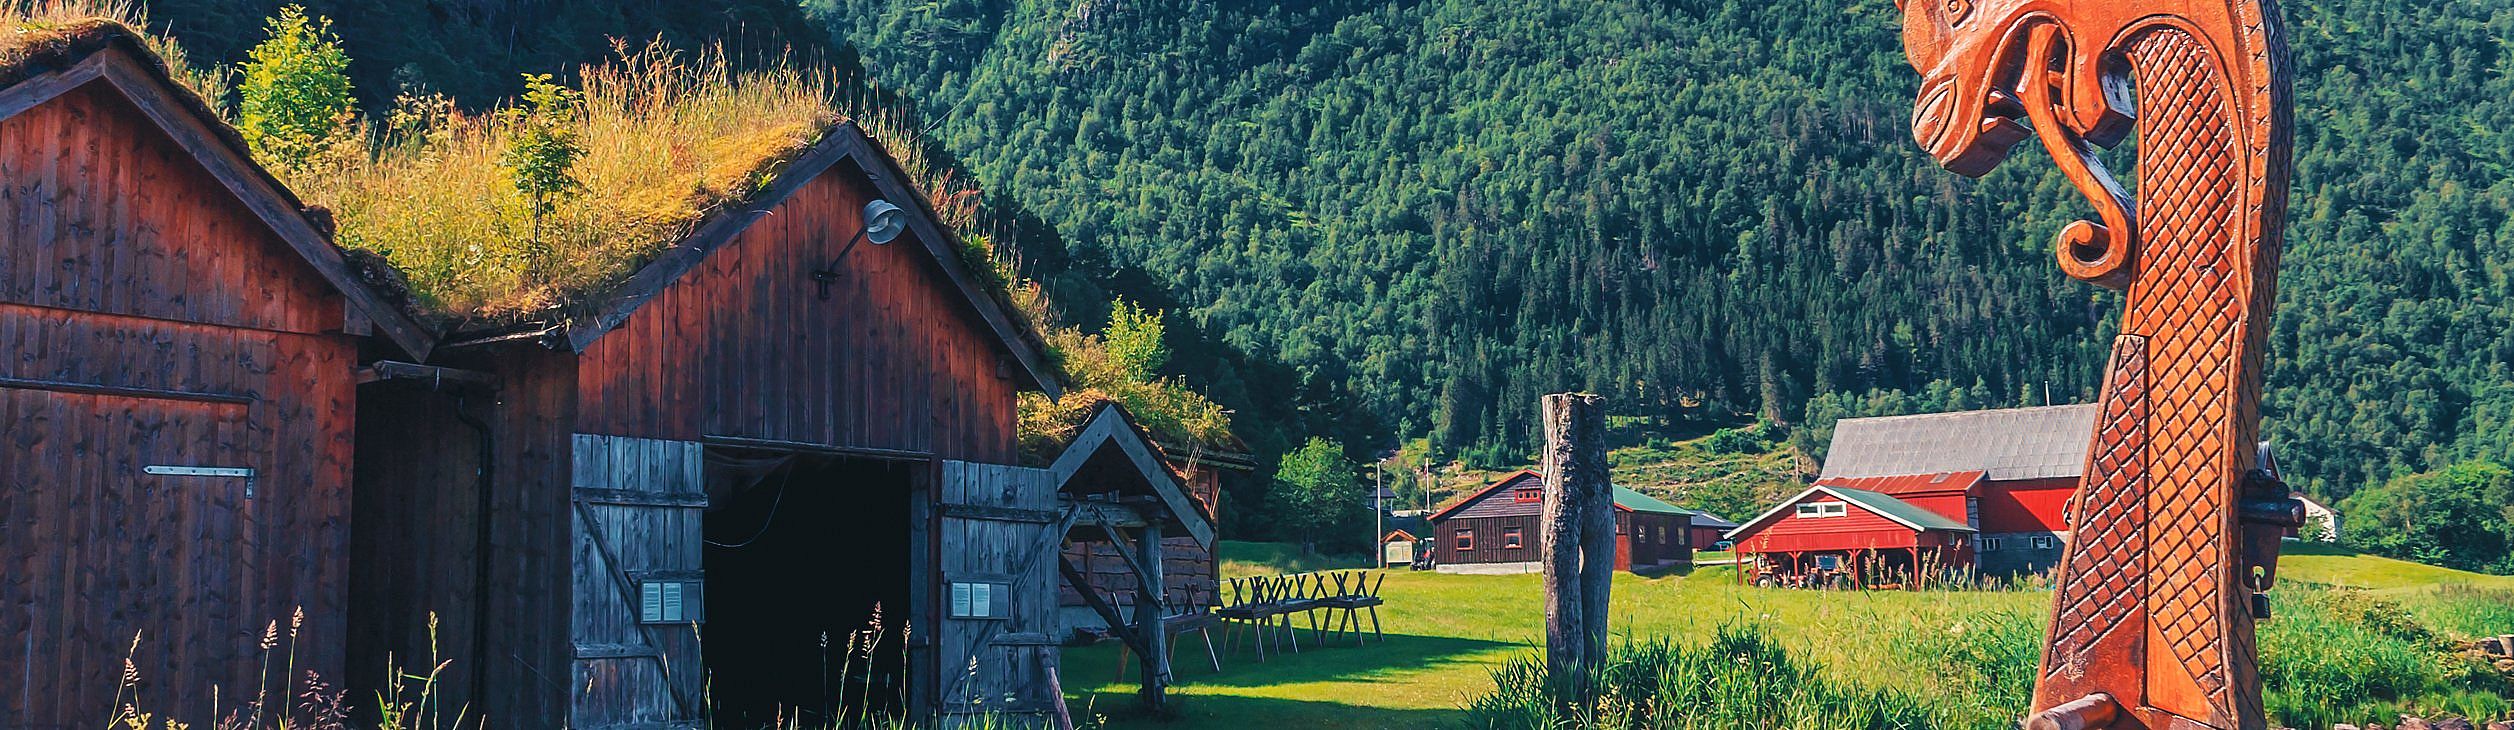 Norway historical sites